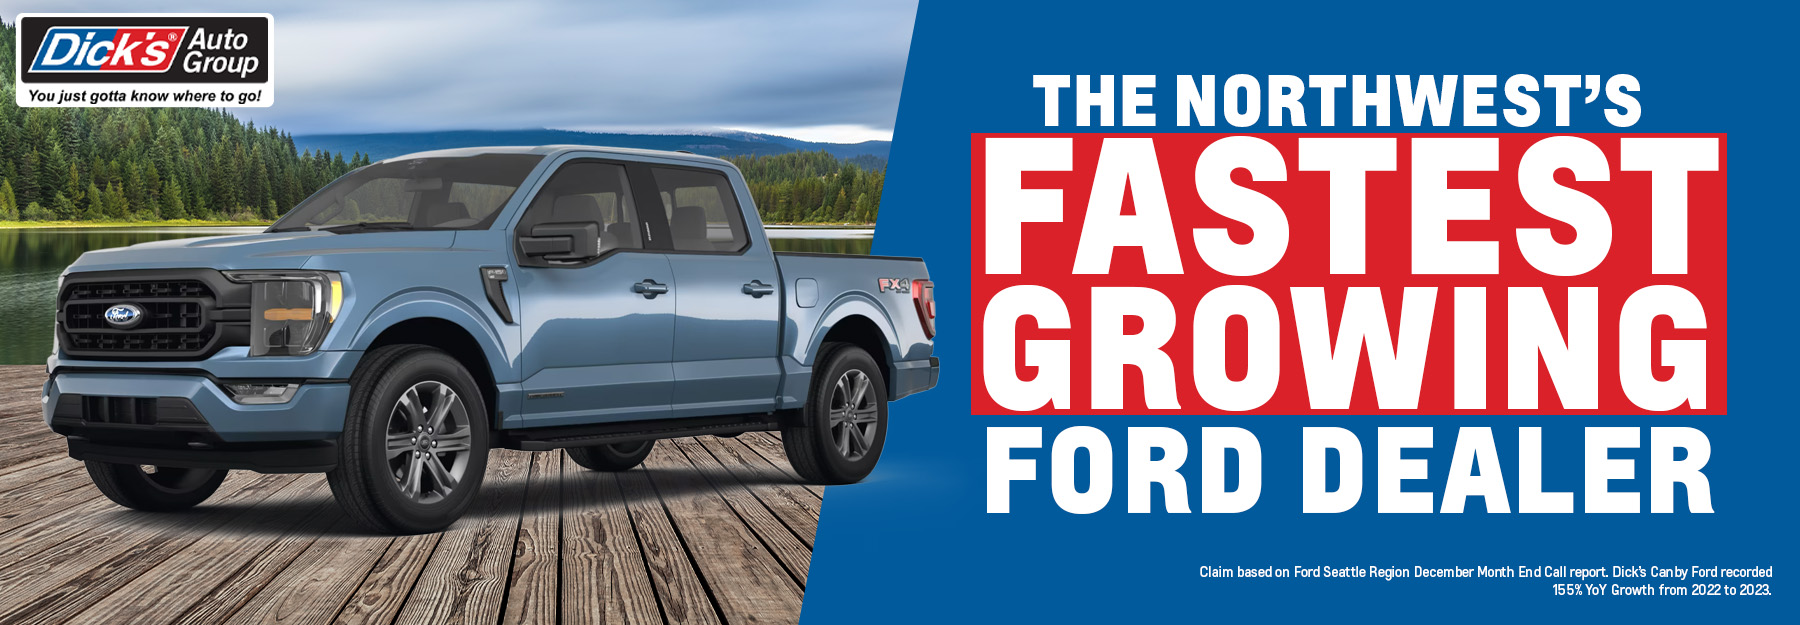 Northwest's Fastest Growing Ford Dealer